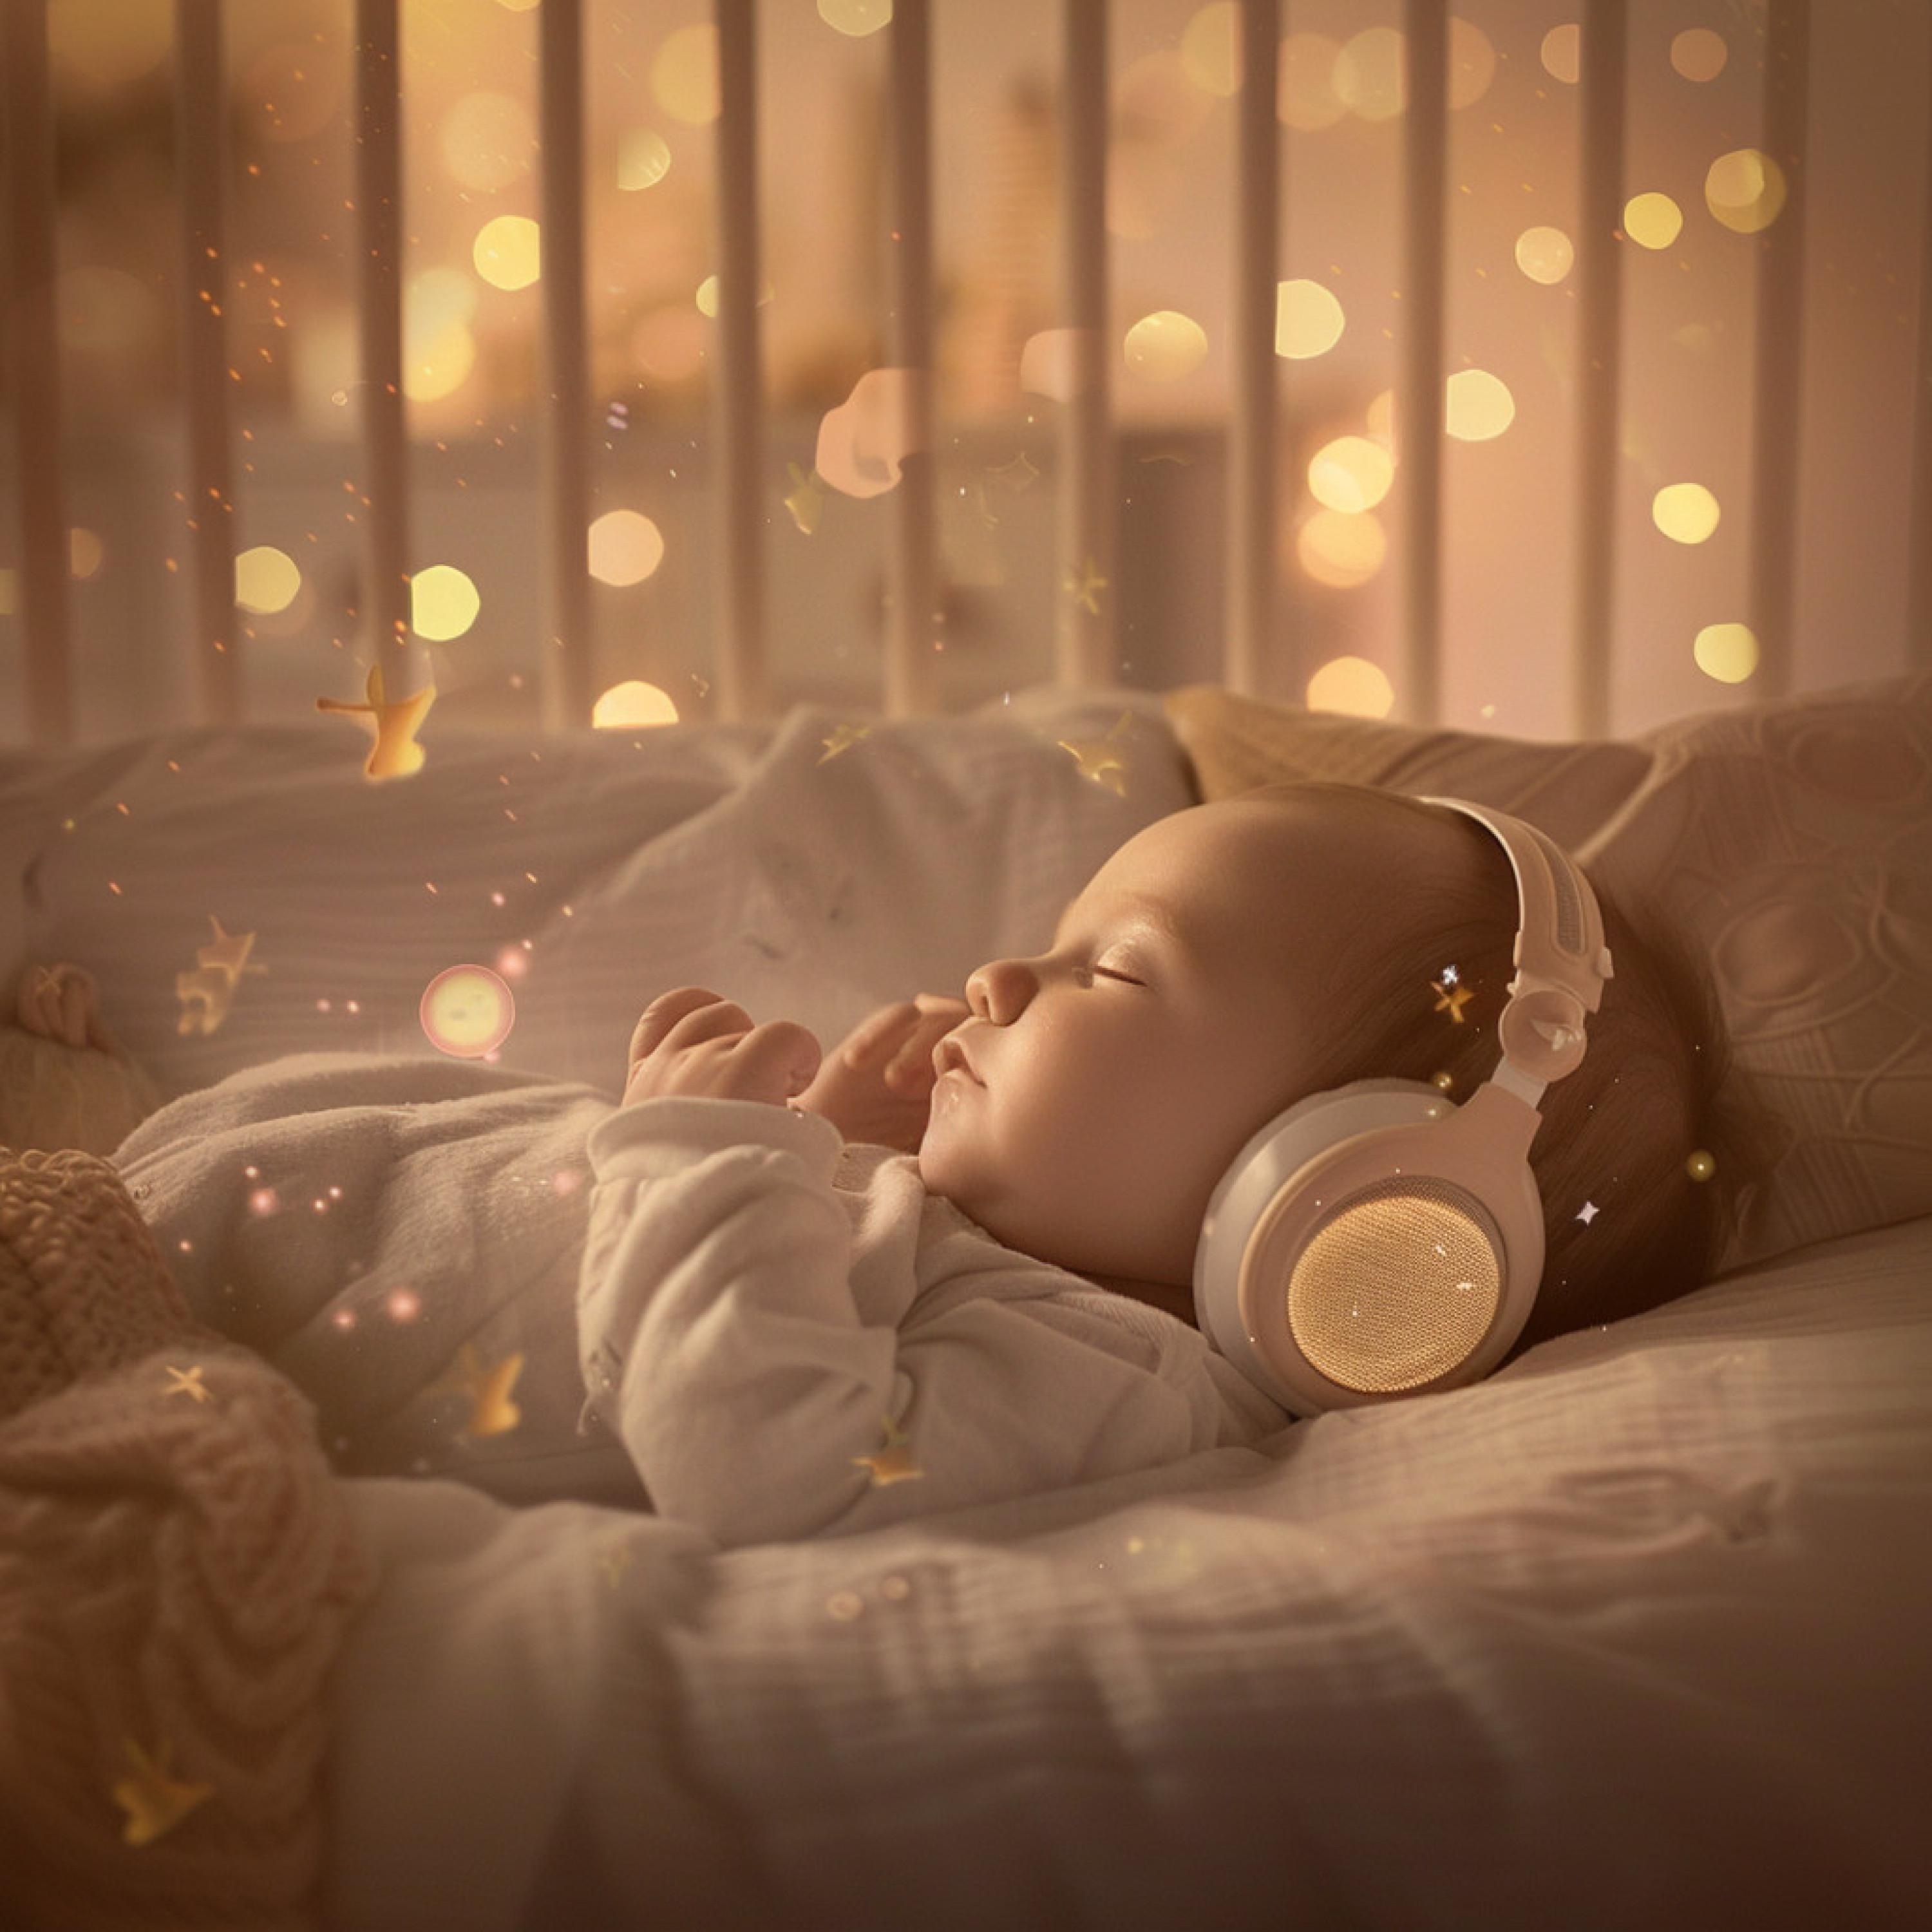 Baby Nap Time - Sleep Solace Harmony